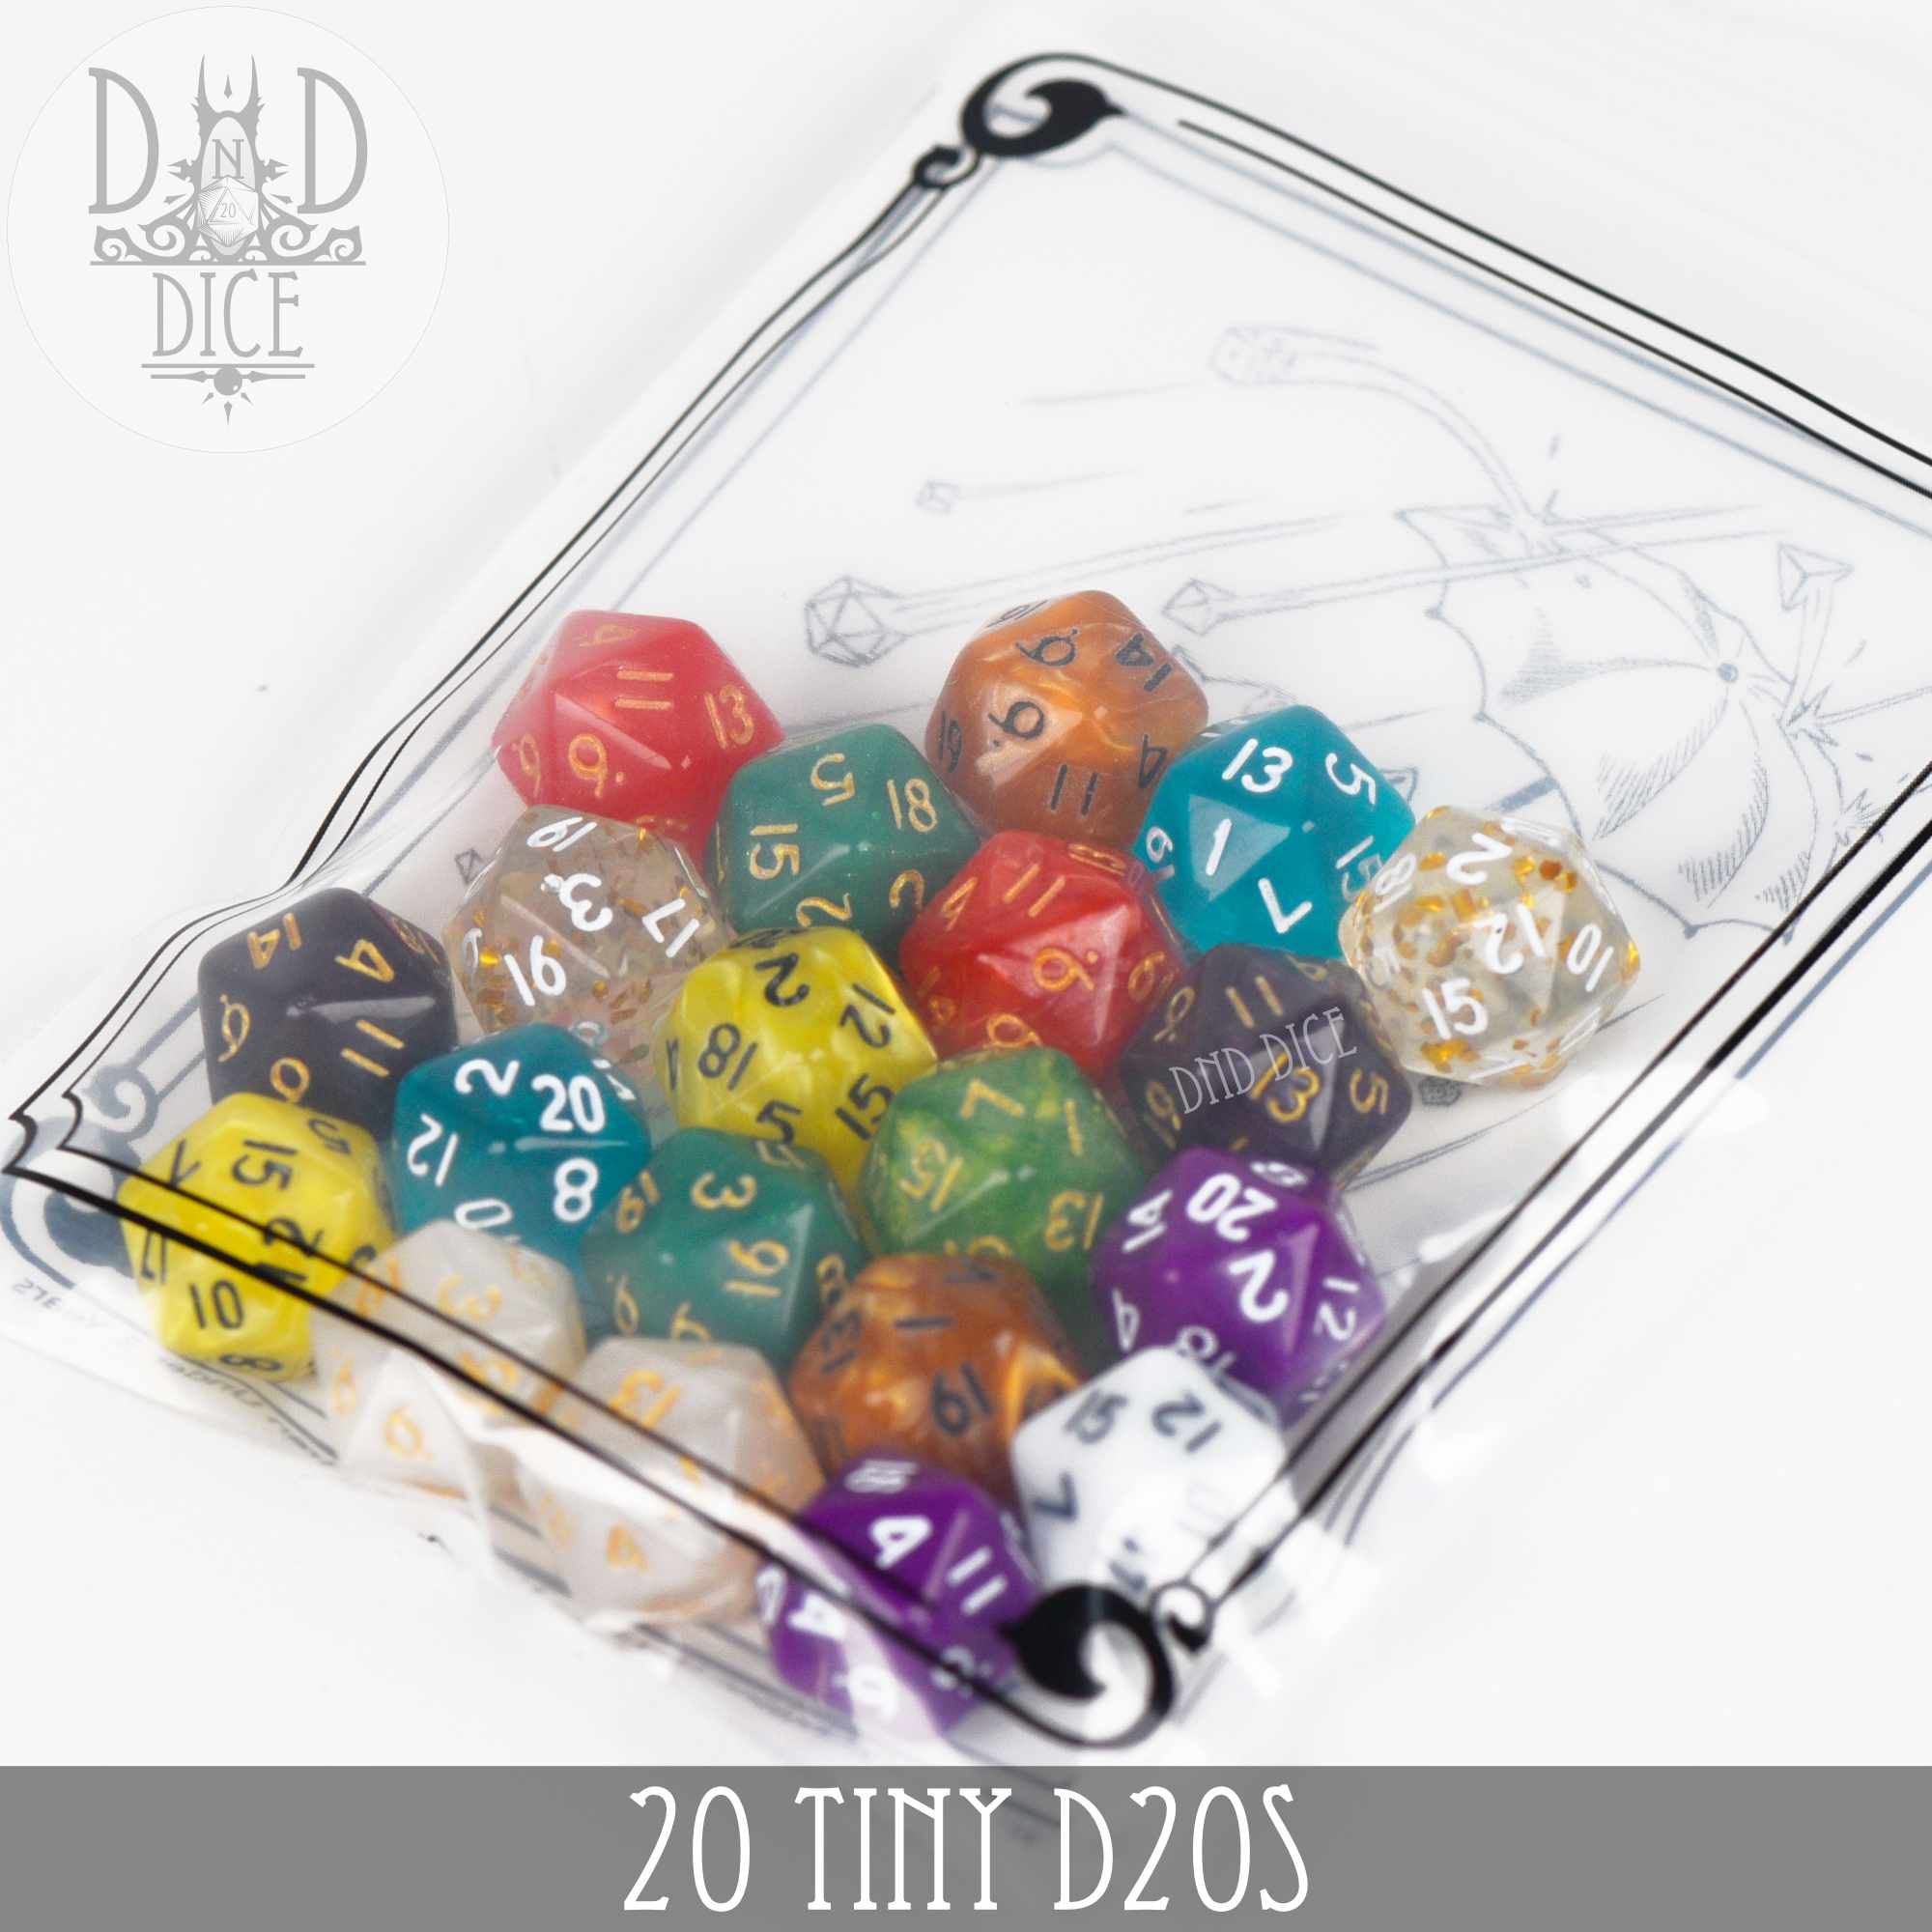 20 Tiny D20s